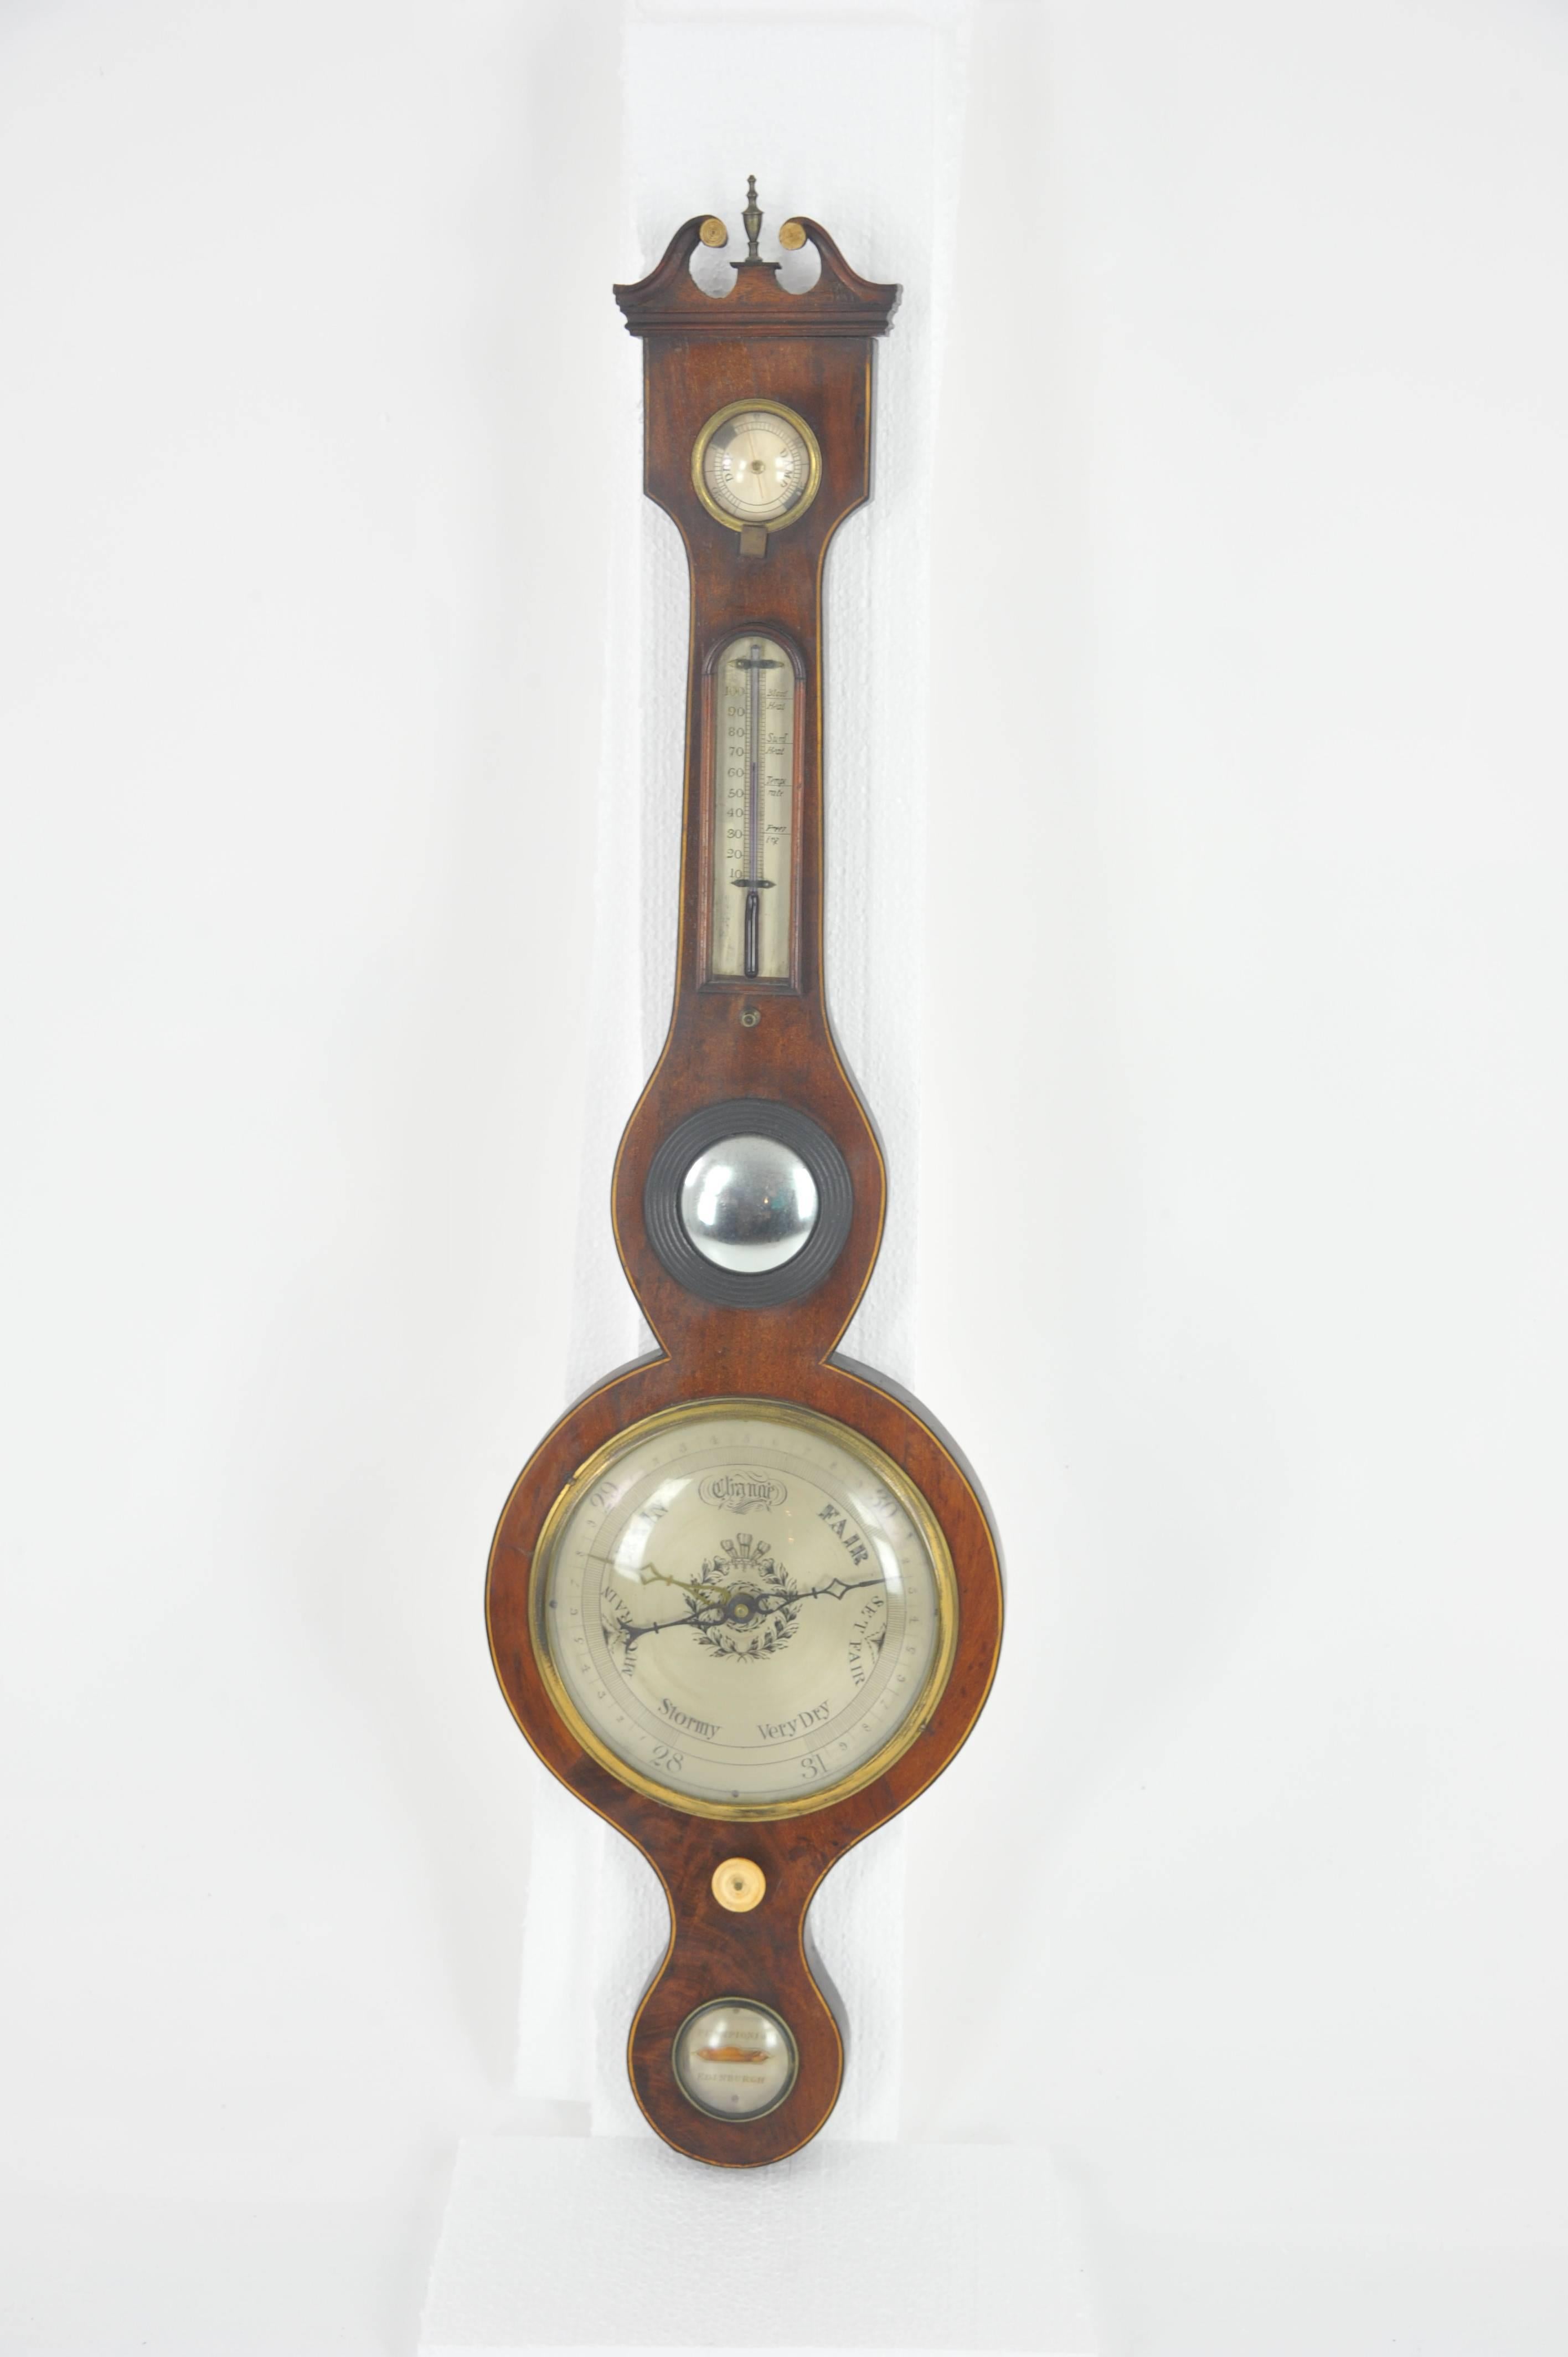 Antique banjo barometer, decorative barometer, Georgian mahogany, Scotland, 1820, antique furniture

Scotland, 1820
Mahogany with satinwood stringing
Swan neck pediment over a hydrometer and a thermometer below
Small circular mirror
Mreasures: